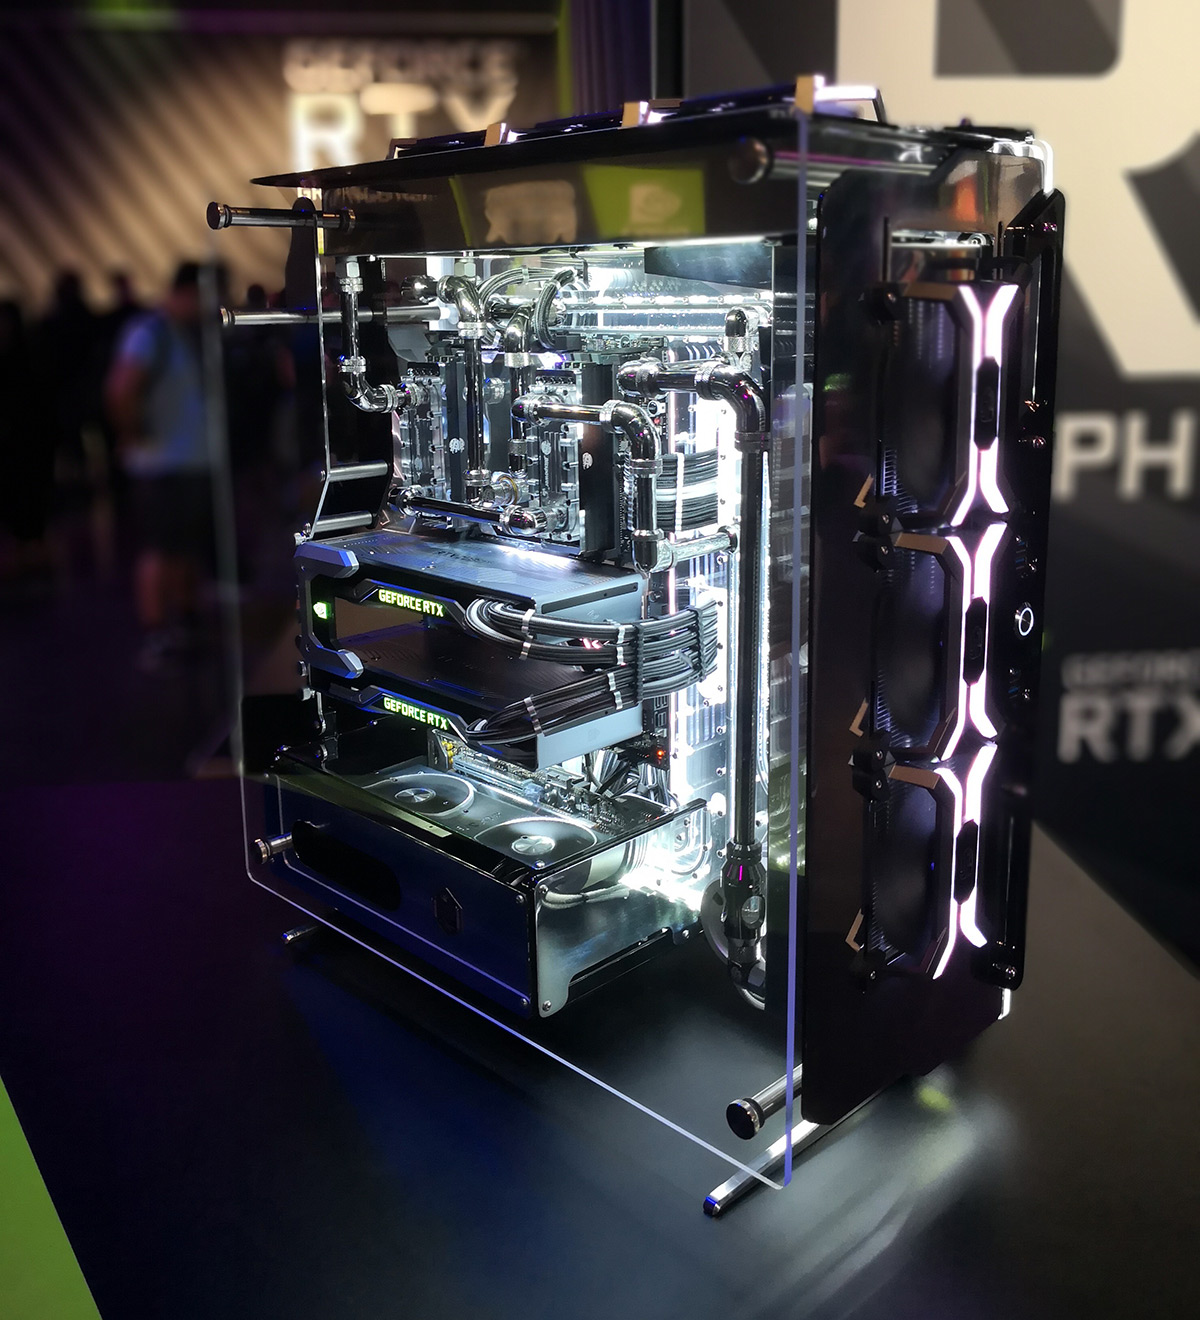 Nvidia RTX 2080 Ti GPU launching together with RTX 2070/2080 -   News